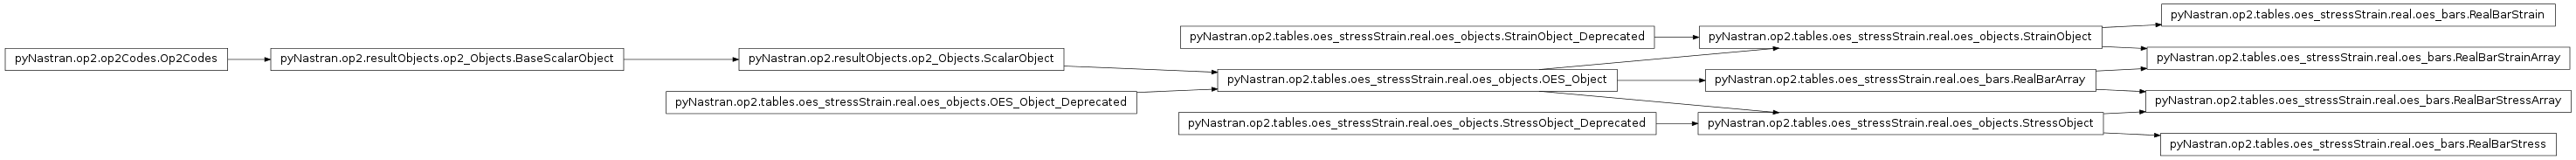 Inheritance diagram of pyNastran.op2.tables.oes_stressStrain.real.oes_bars